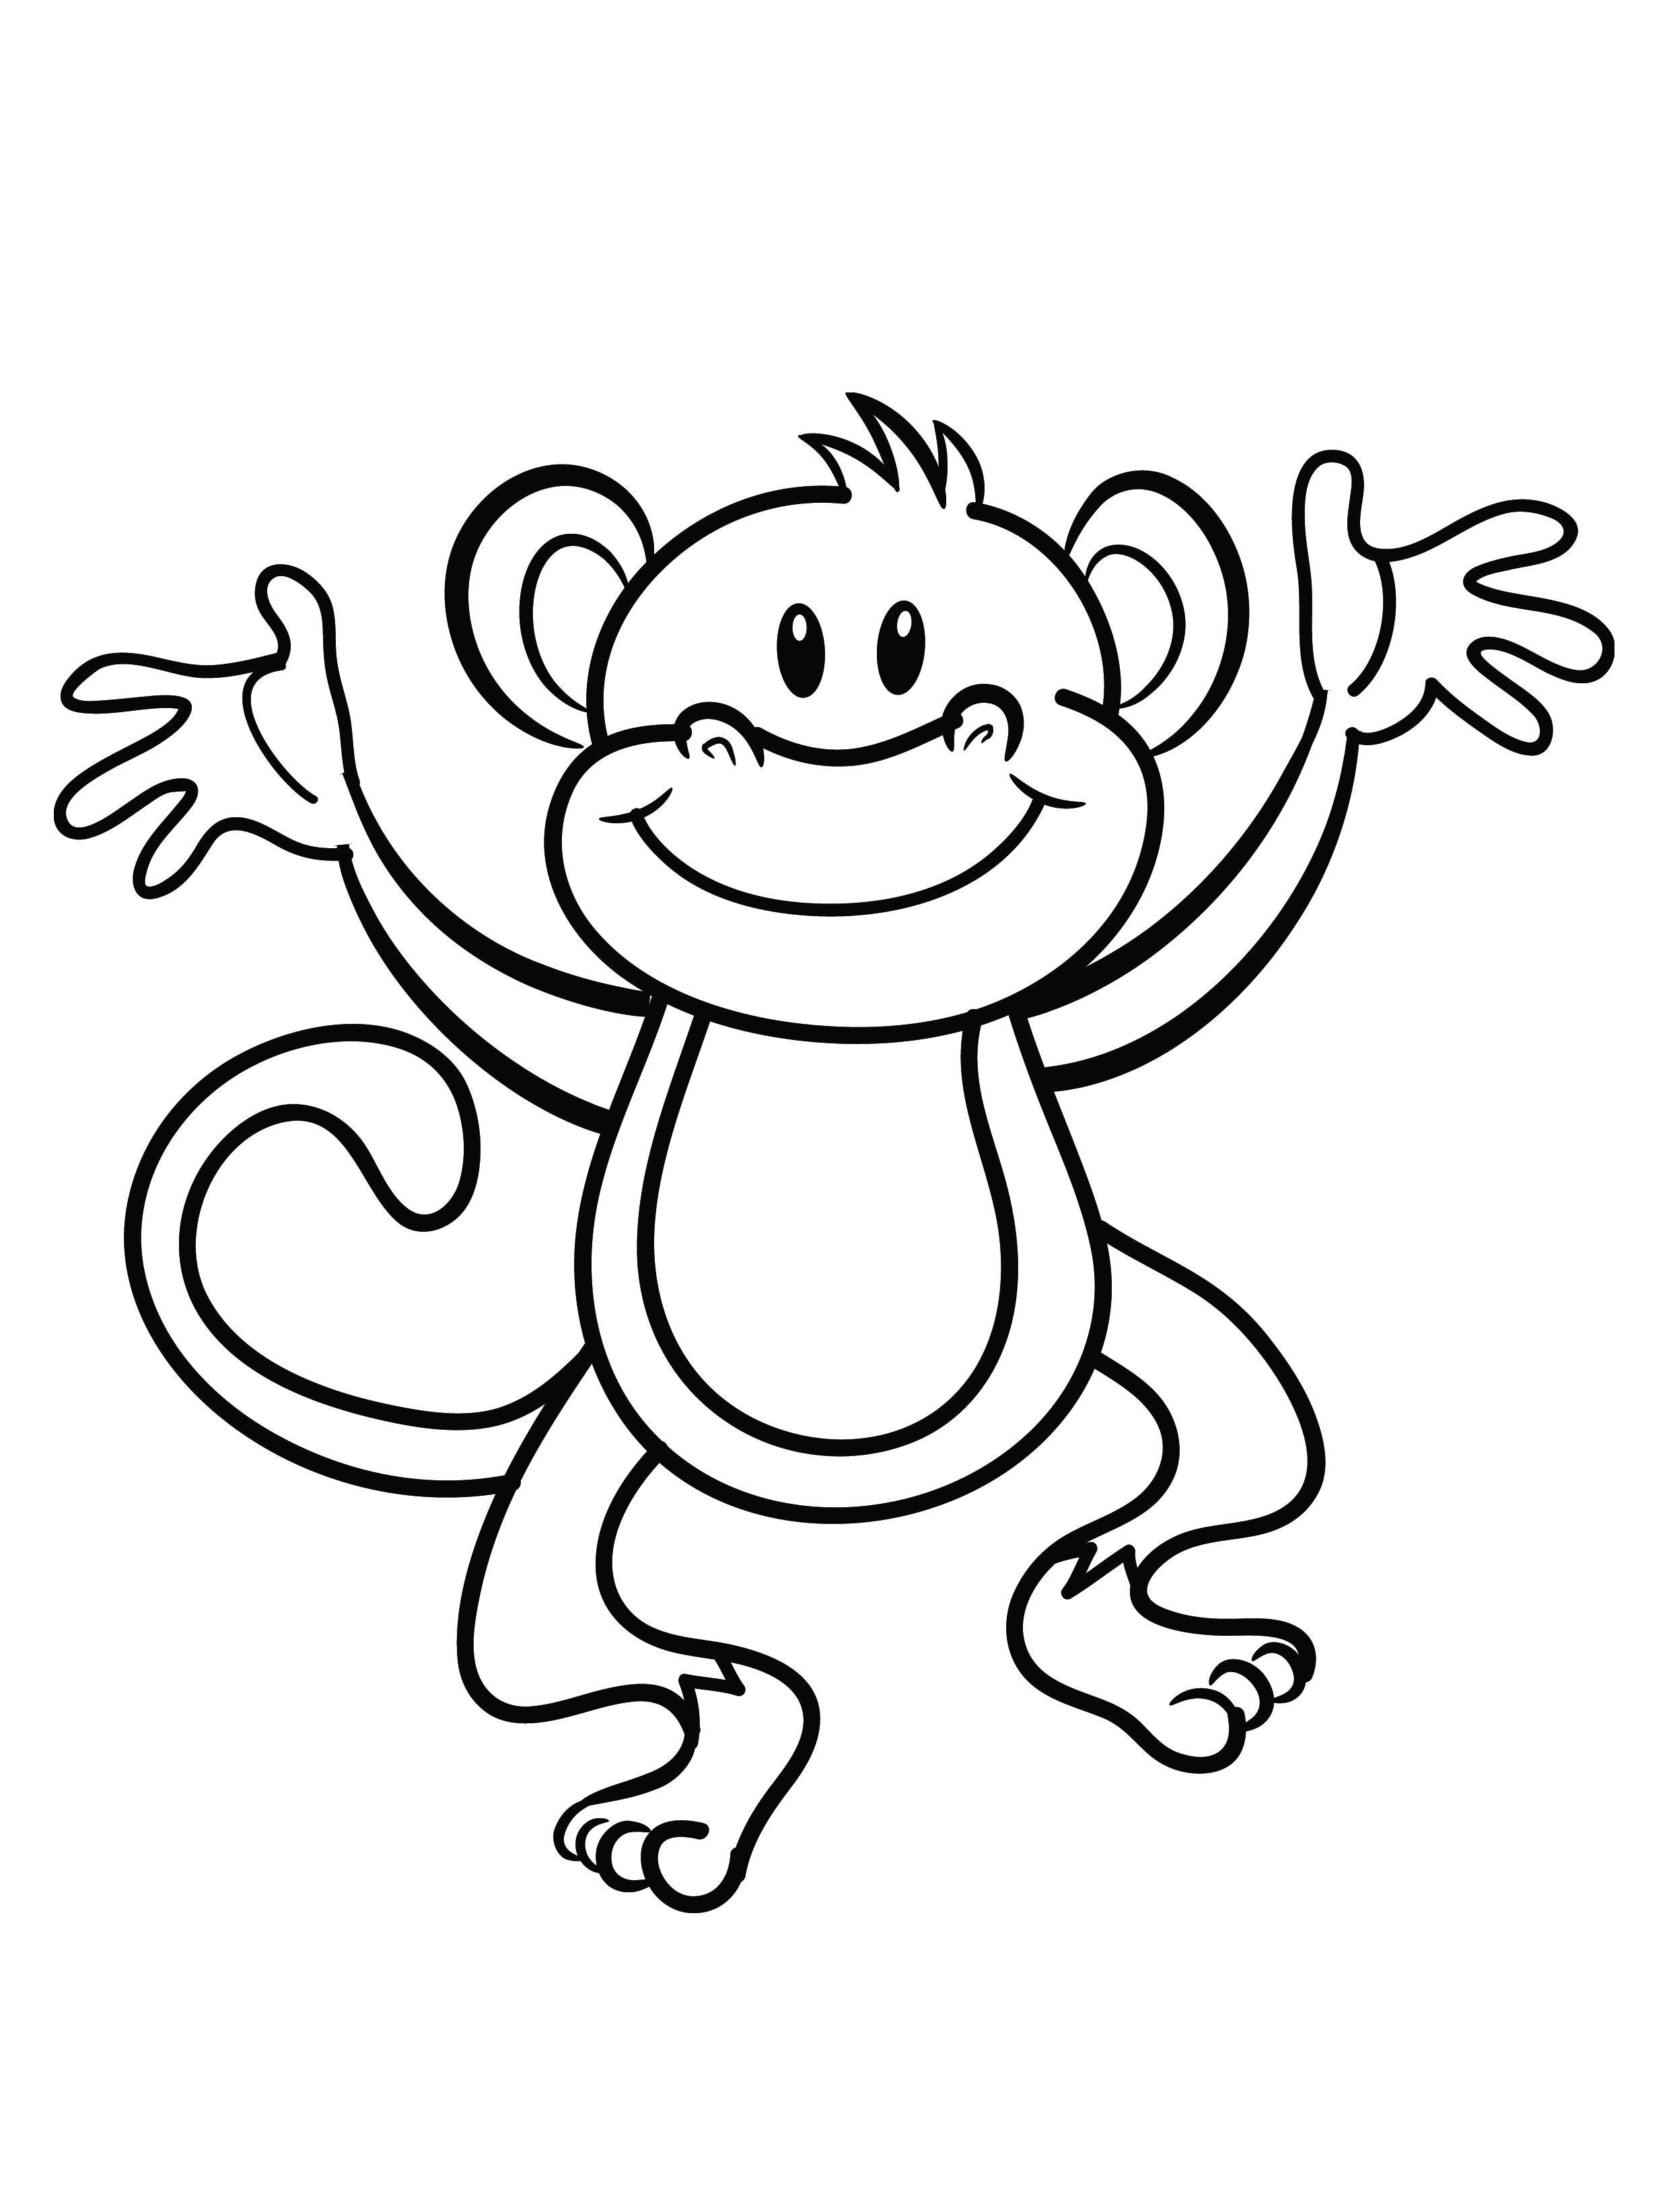 Monkey Pencil Drawing